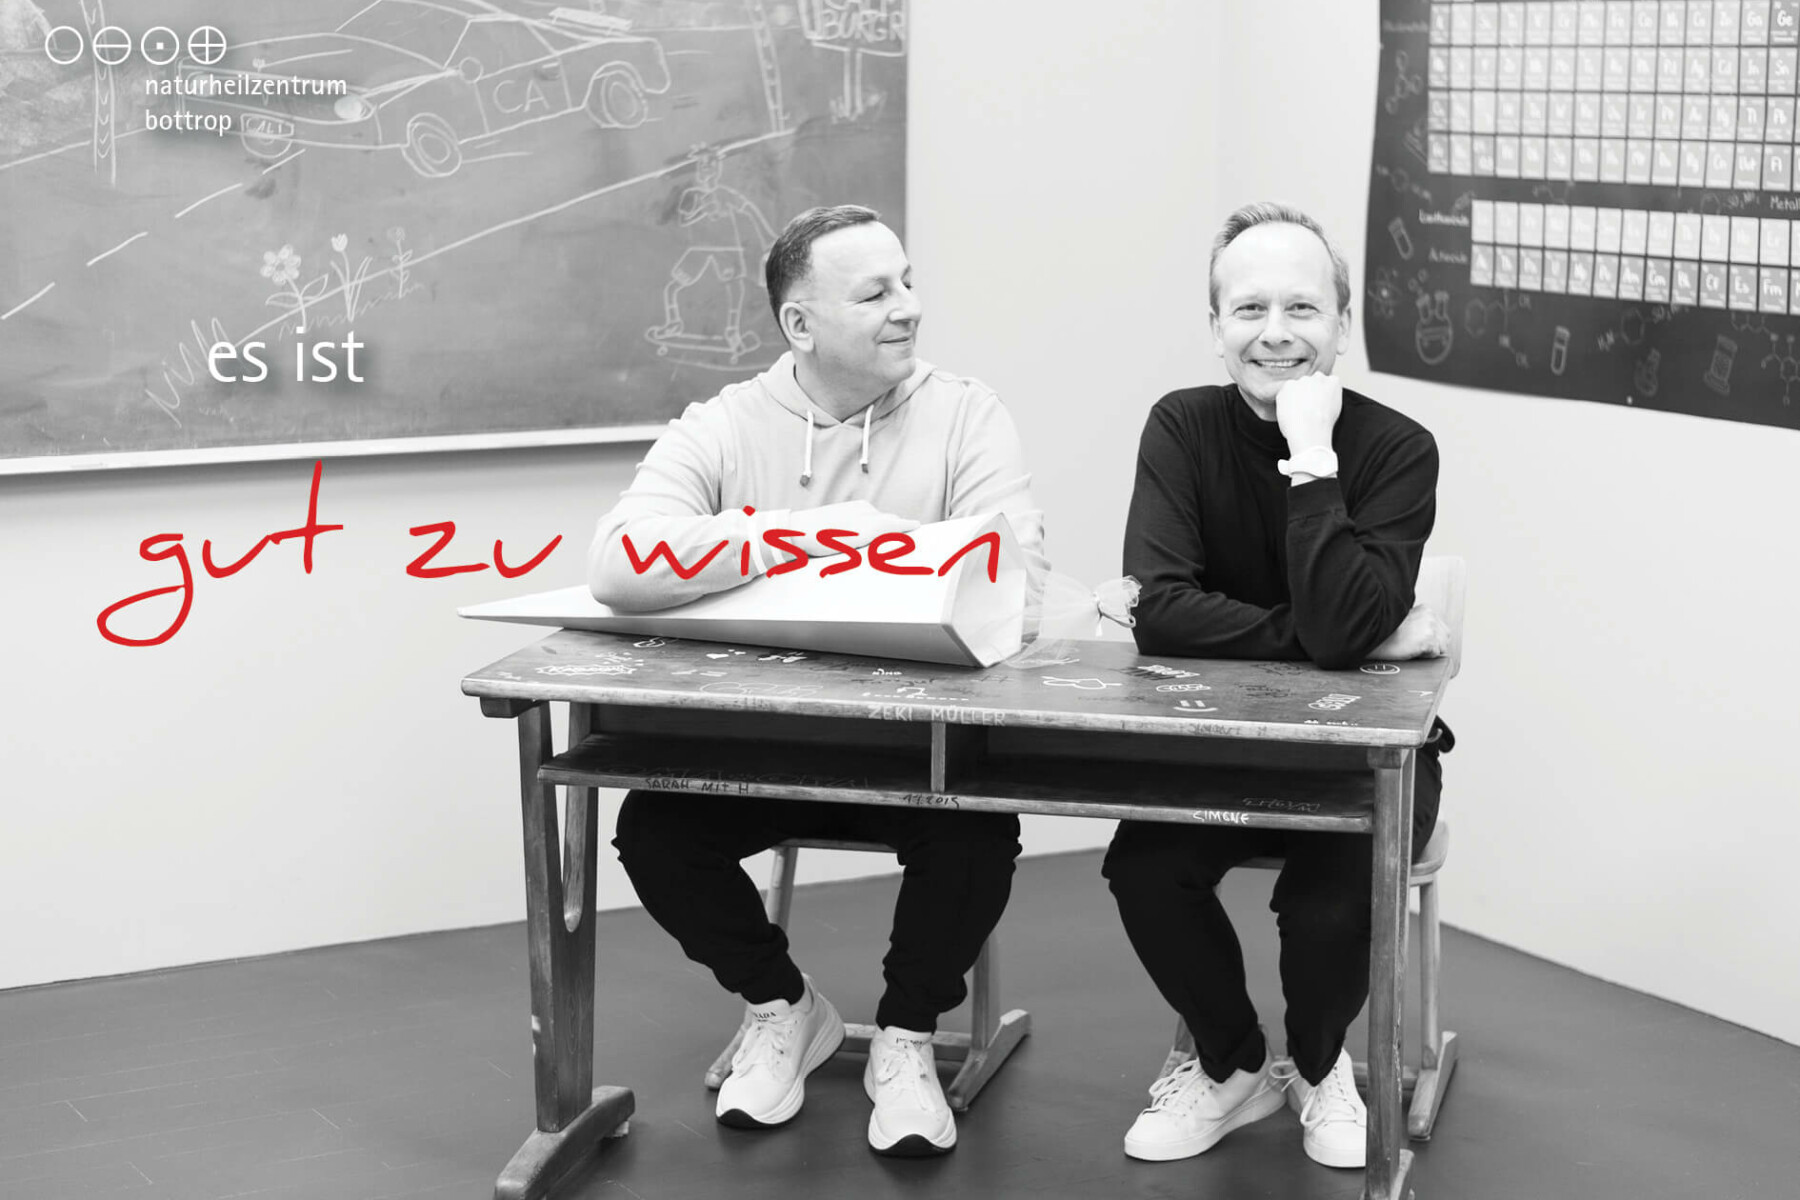 Nabo directors Zitoun & Rüger also support waste avoidance